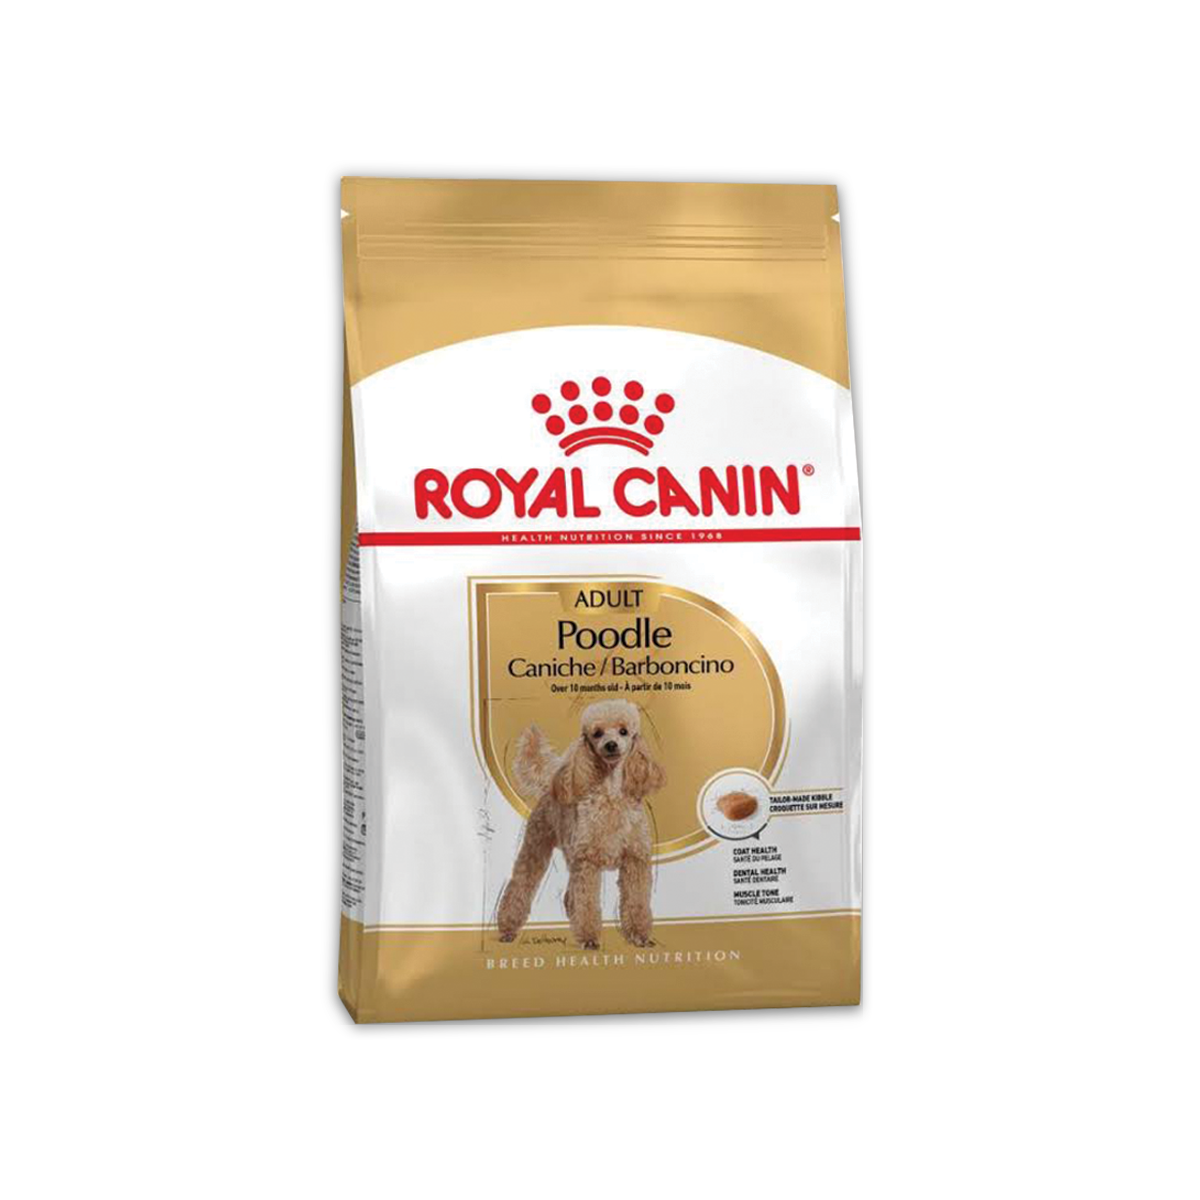 Royal Canin Poodle Adult โรยัล คานิน อาหารสำหรับสุนัขโตพันธุ์ พุดเดิ้ล อายุ 10 เดือนขึ้นไป